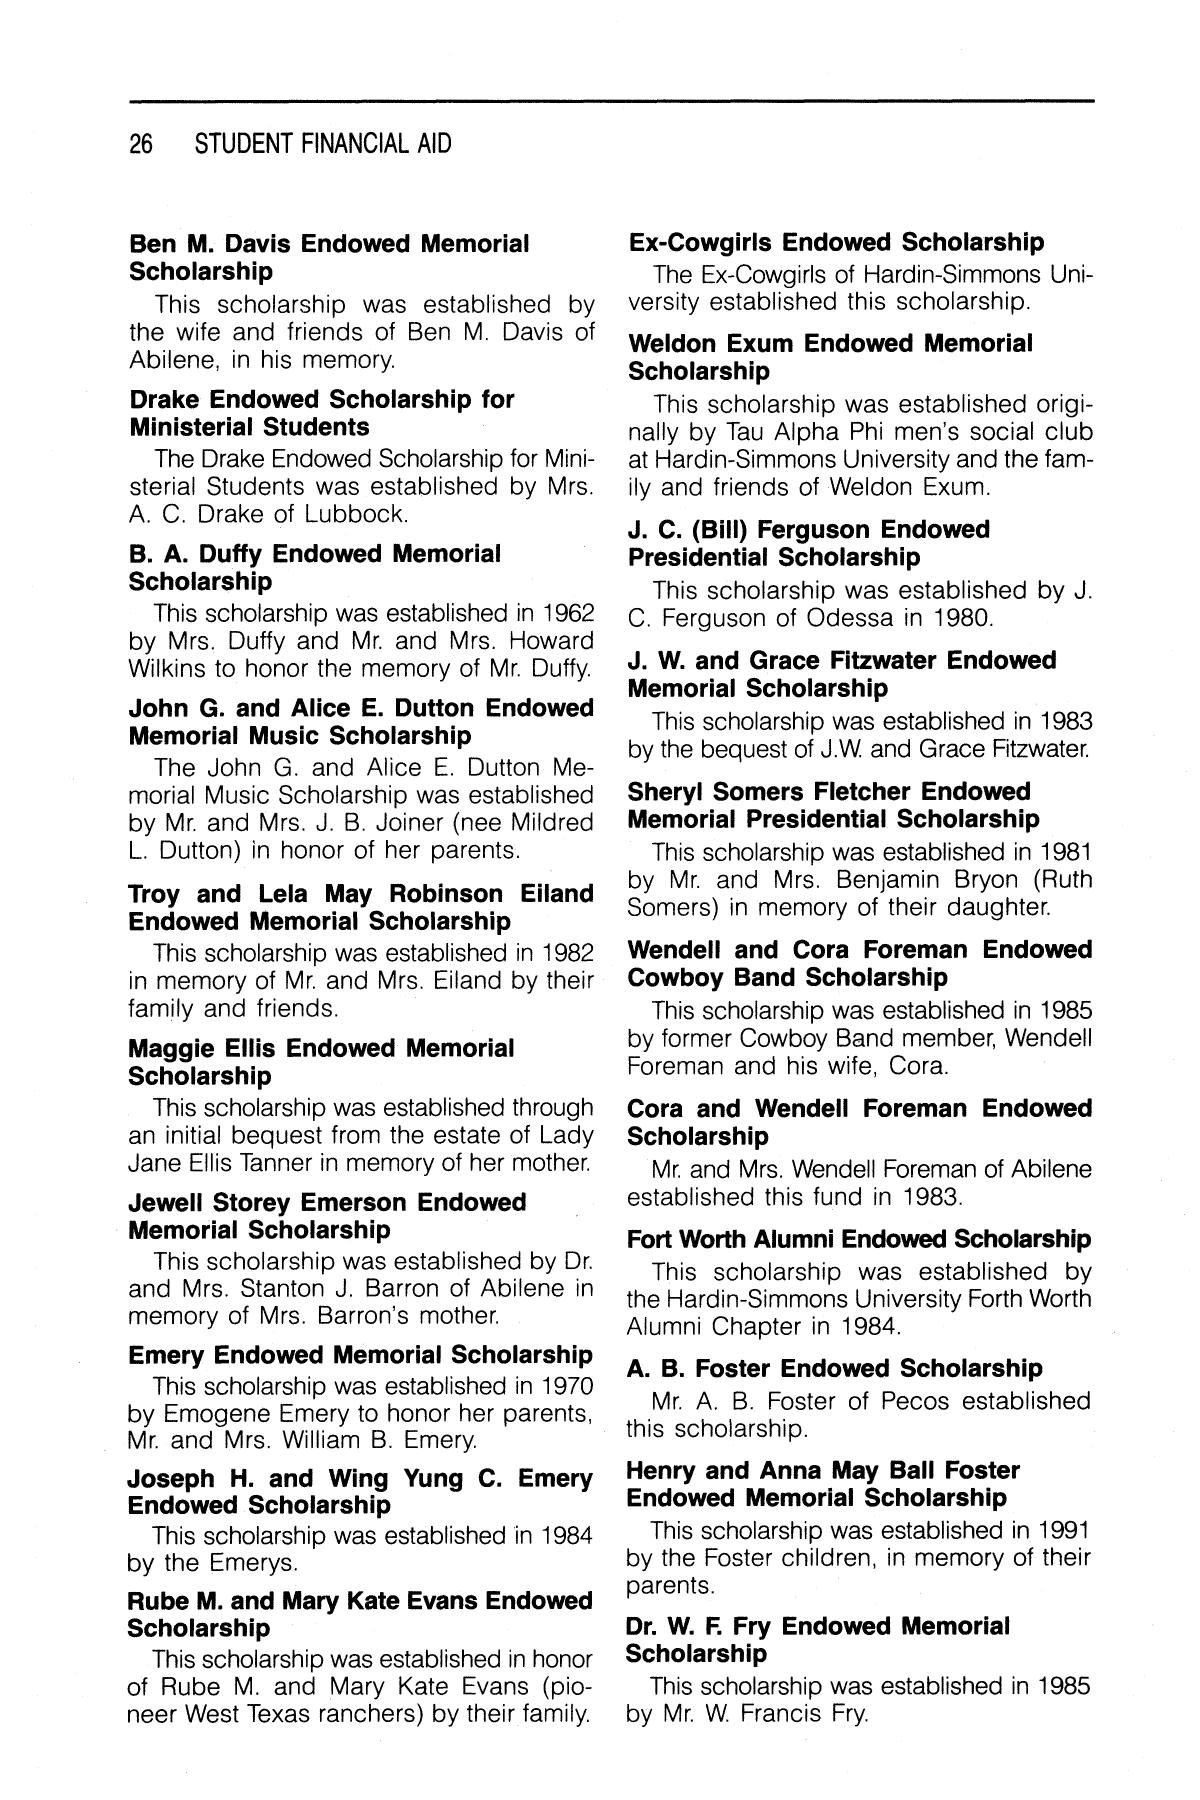 Catalog of Hardin-Simmons University, 1994-1995 Undergraduate Bulletin
                                                
                                                    26
                                                